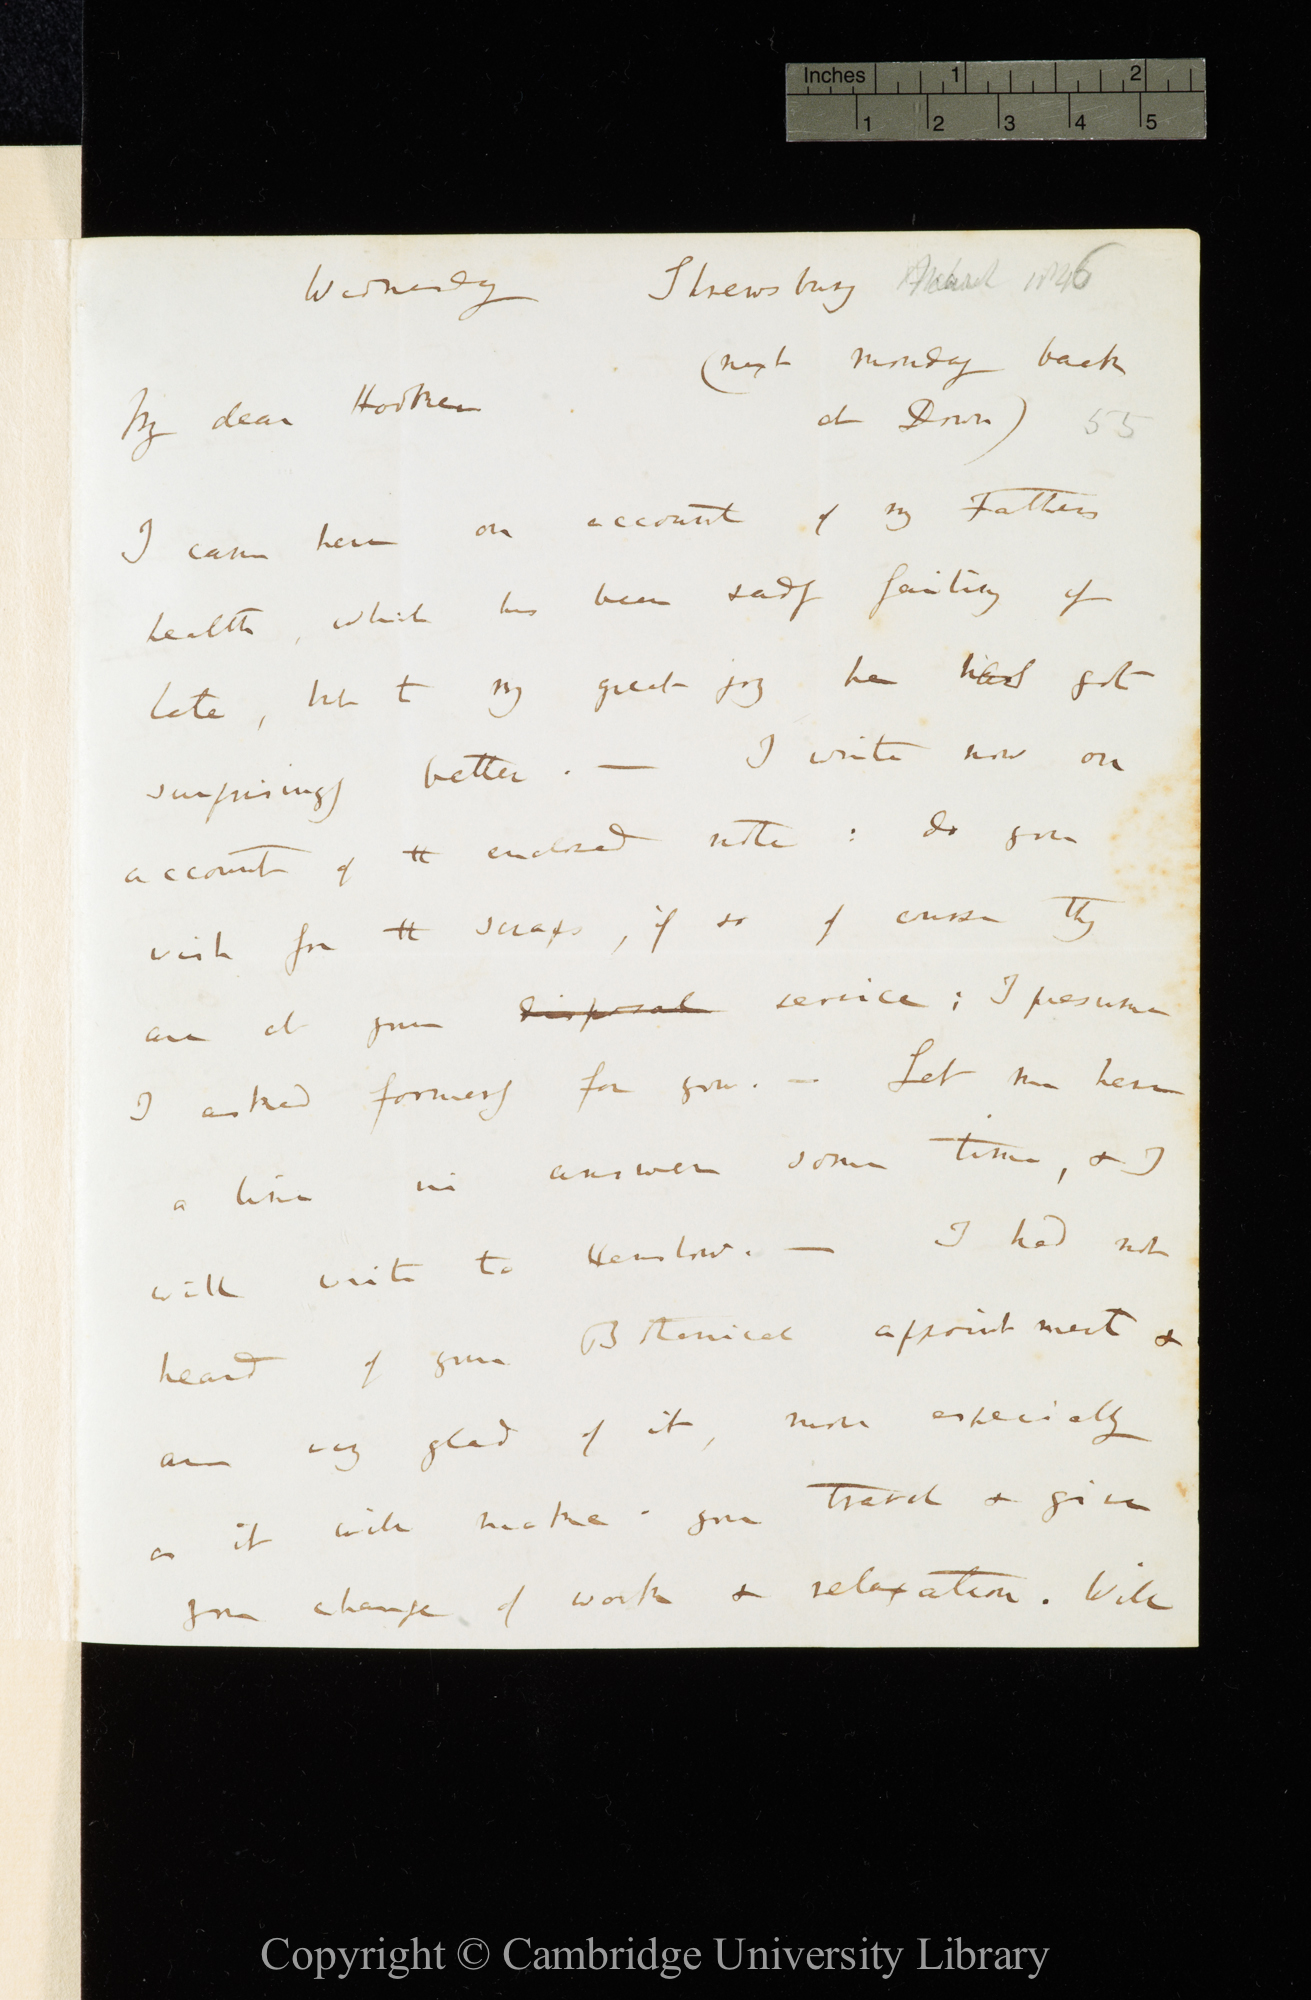 Letter from C. R. Darwin to J. D. Hooker   [25 February 1846]